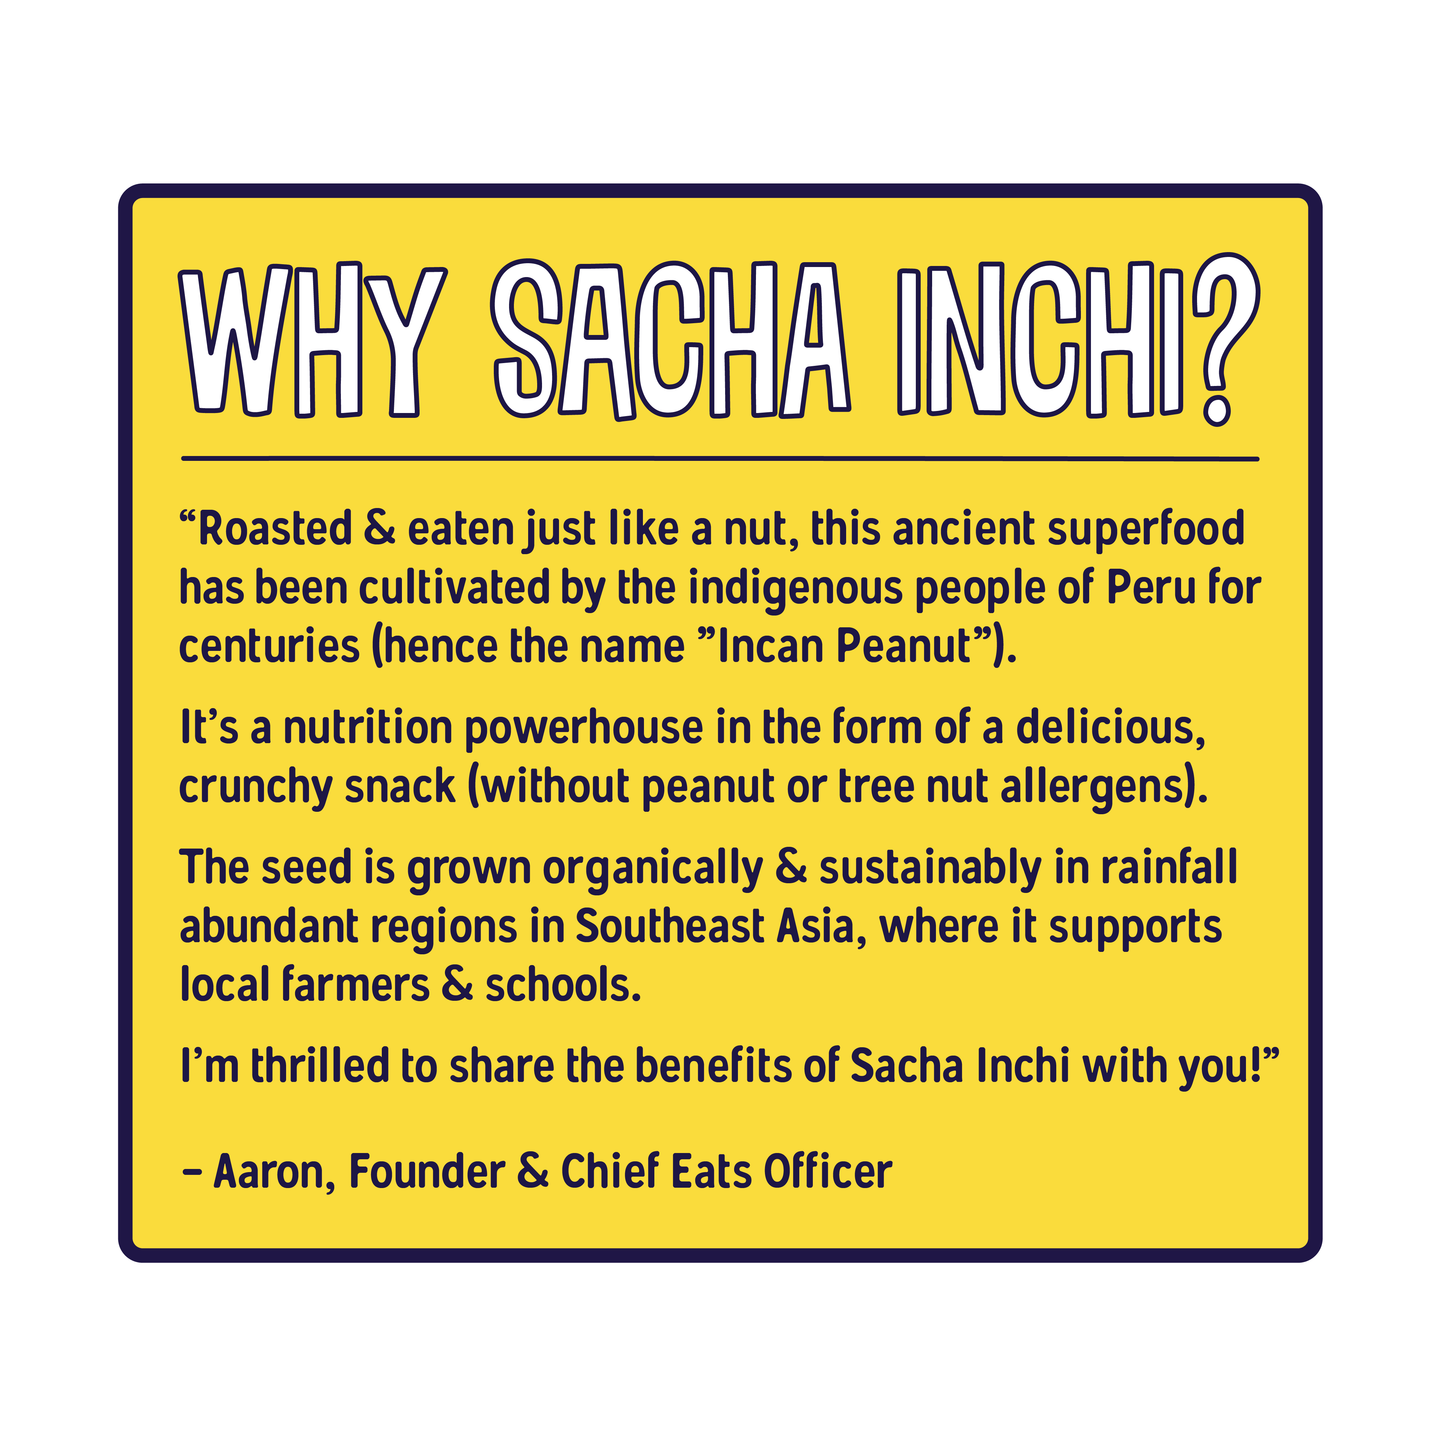 Dark Chocolate Coated - Roasted Sacha Inchi - Incan Seeds [16oz bag]